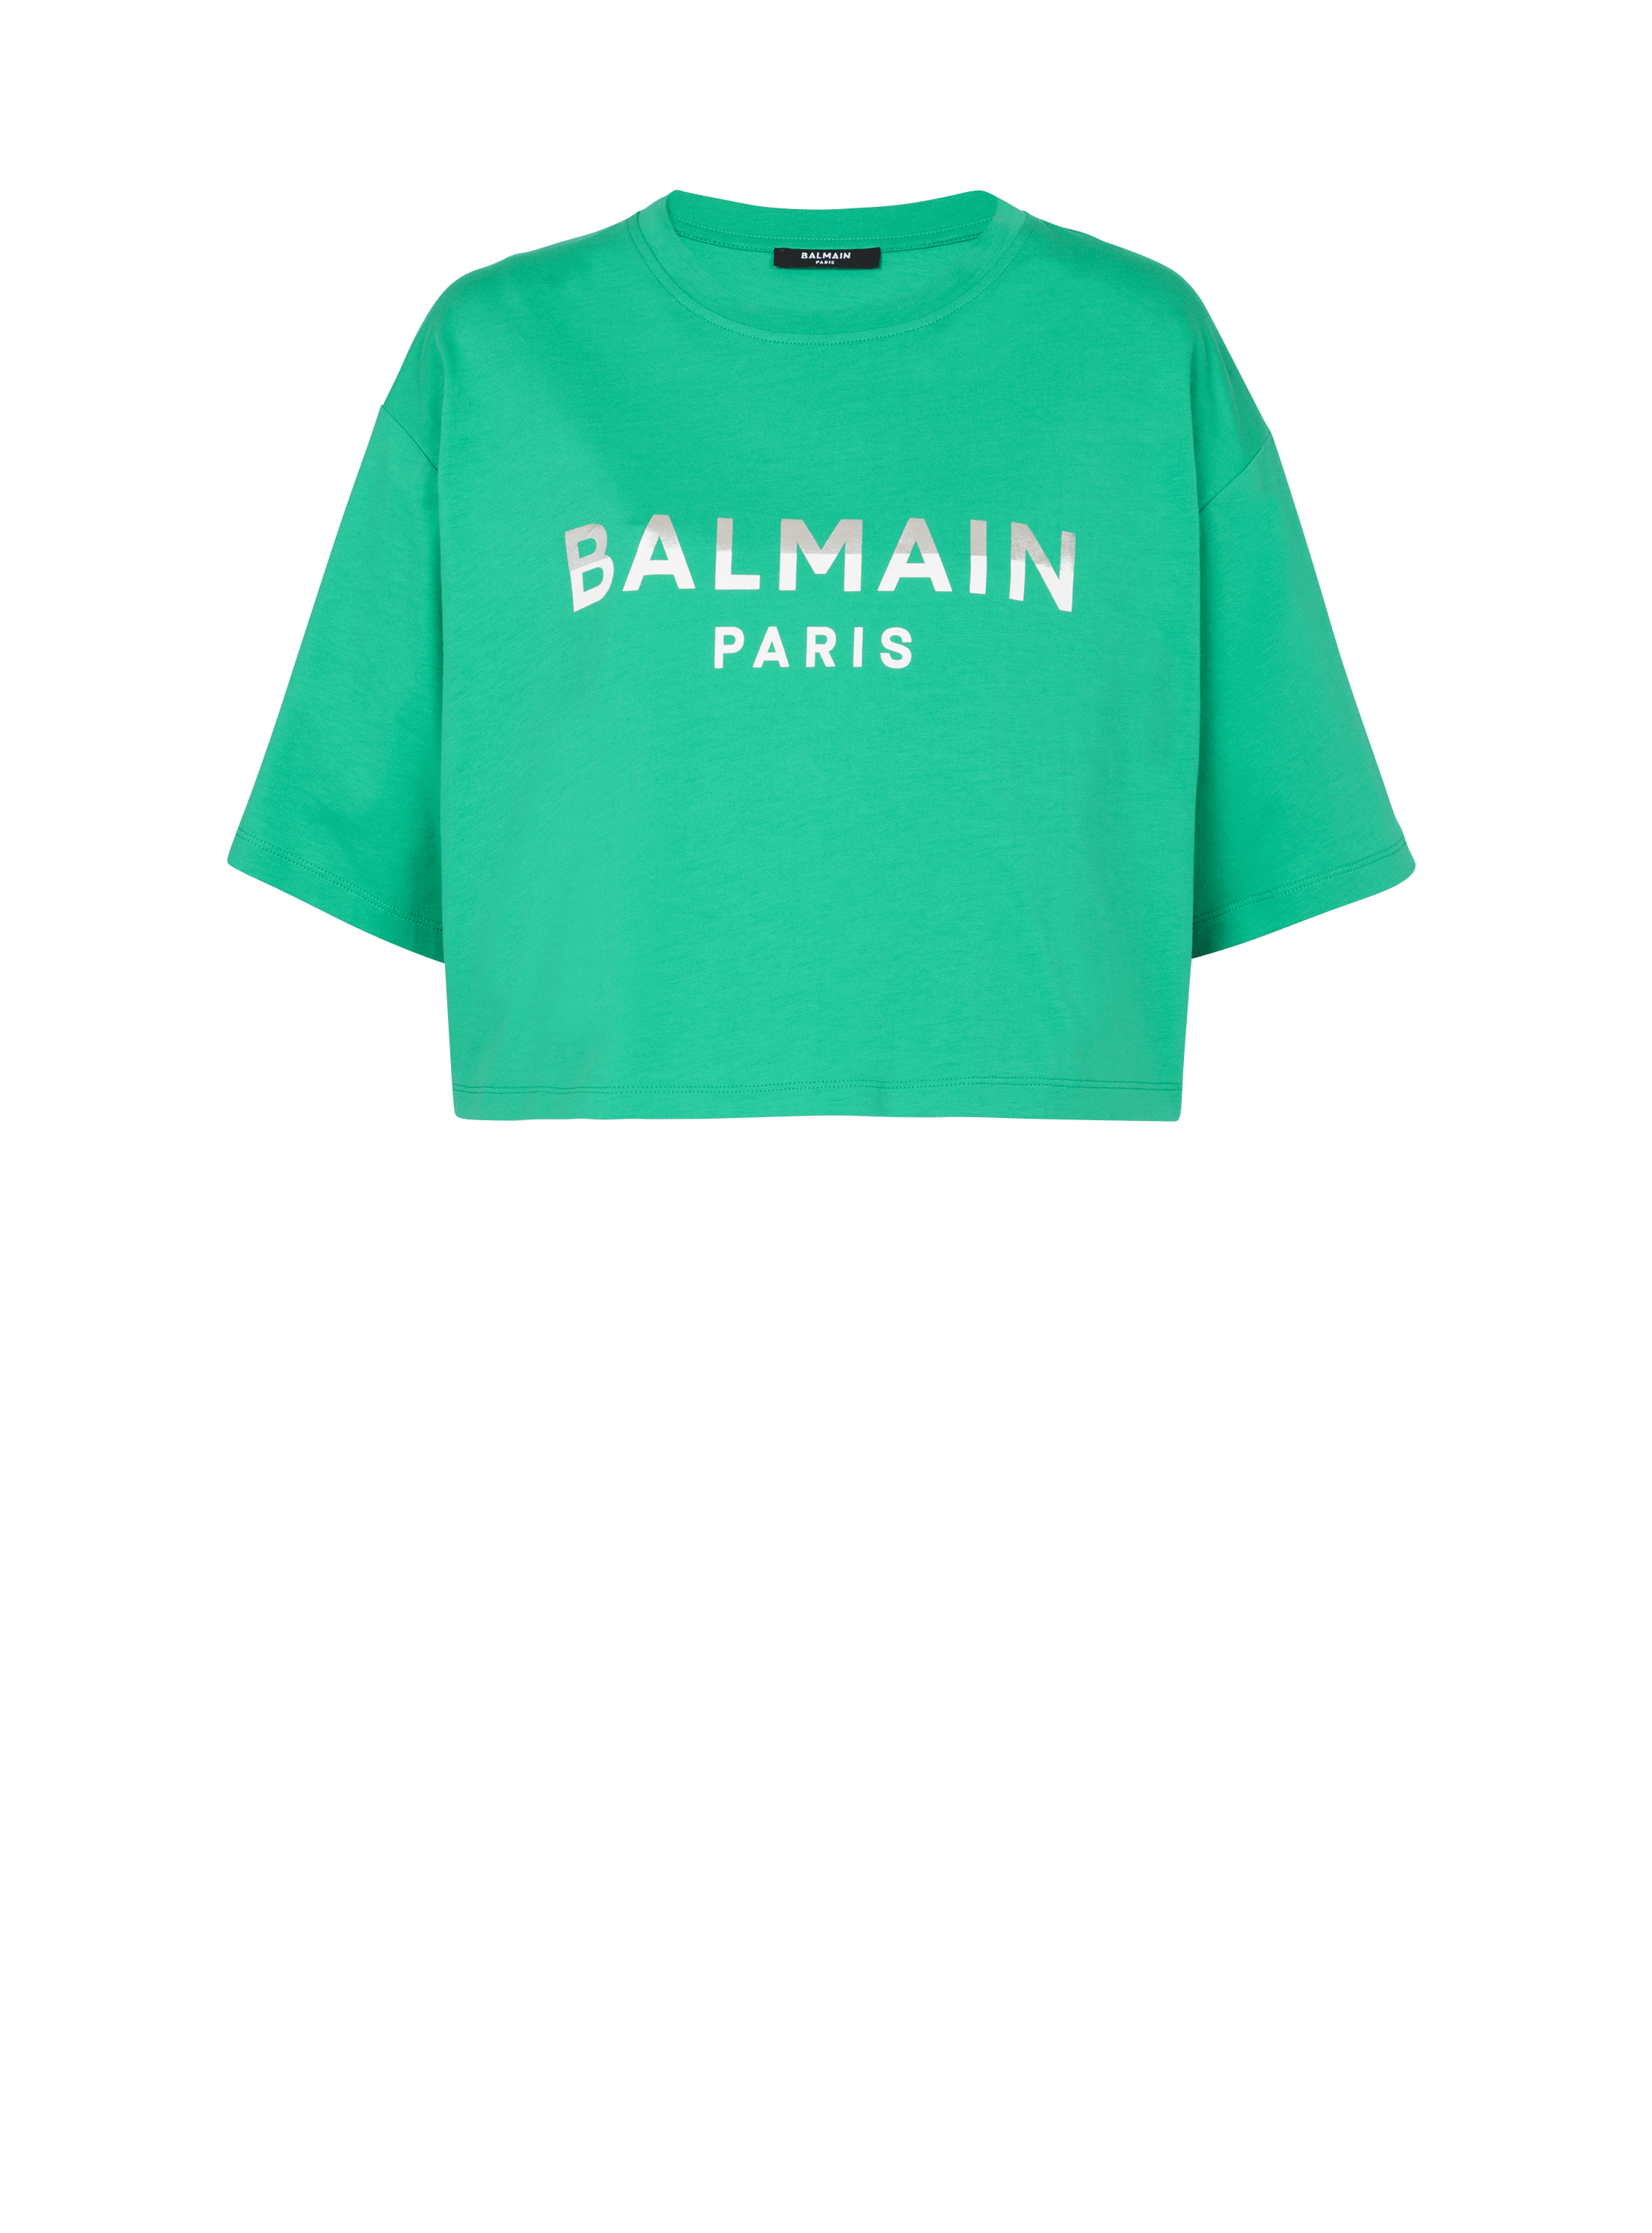 Cropped Balmain Paris T-shirt, green, hi-res